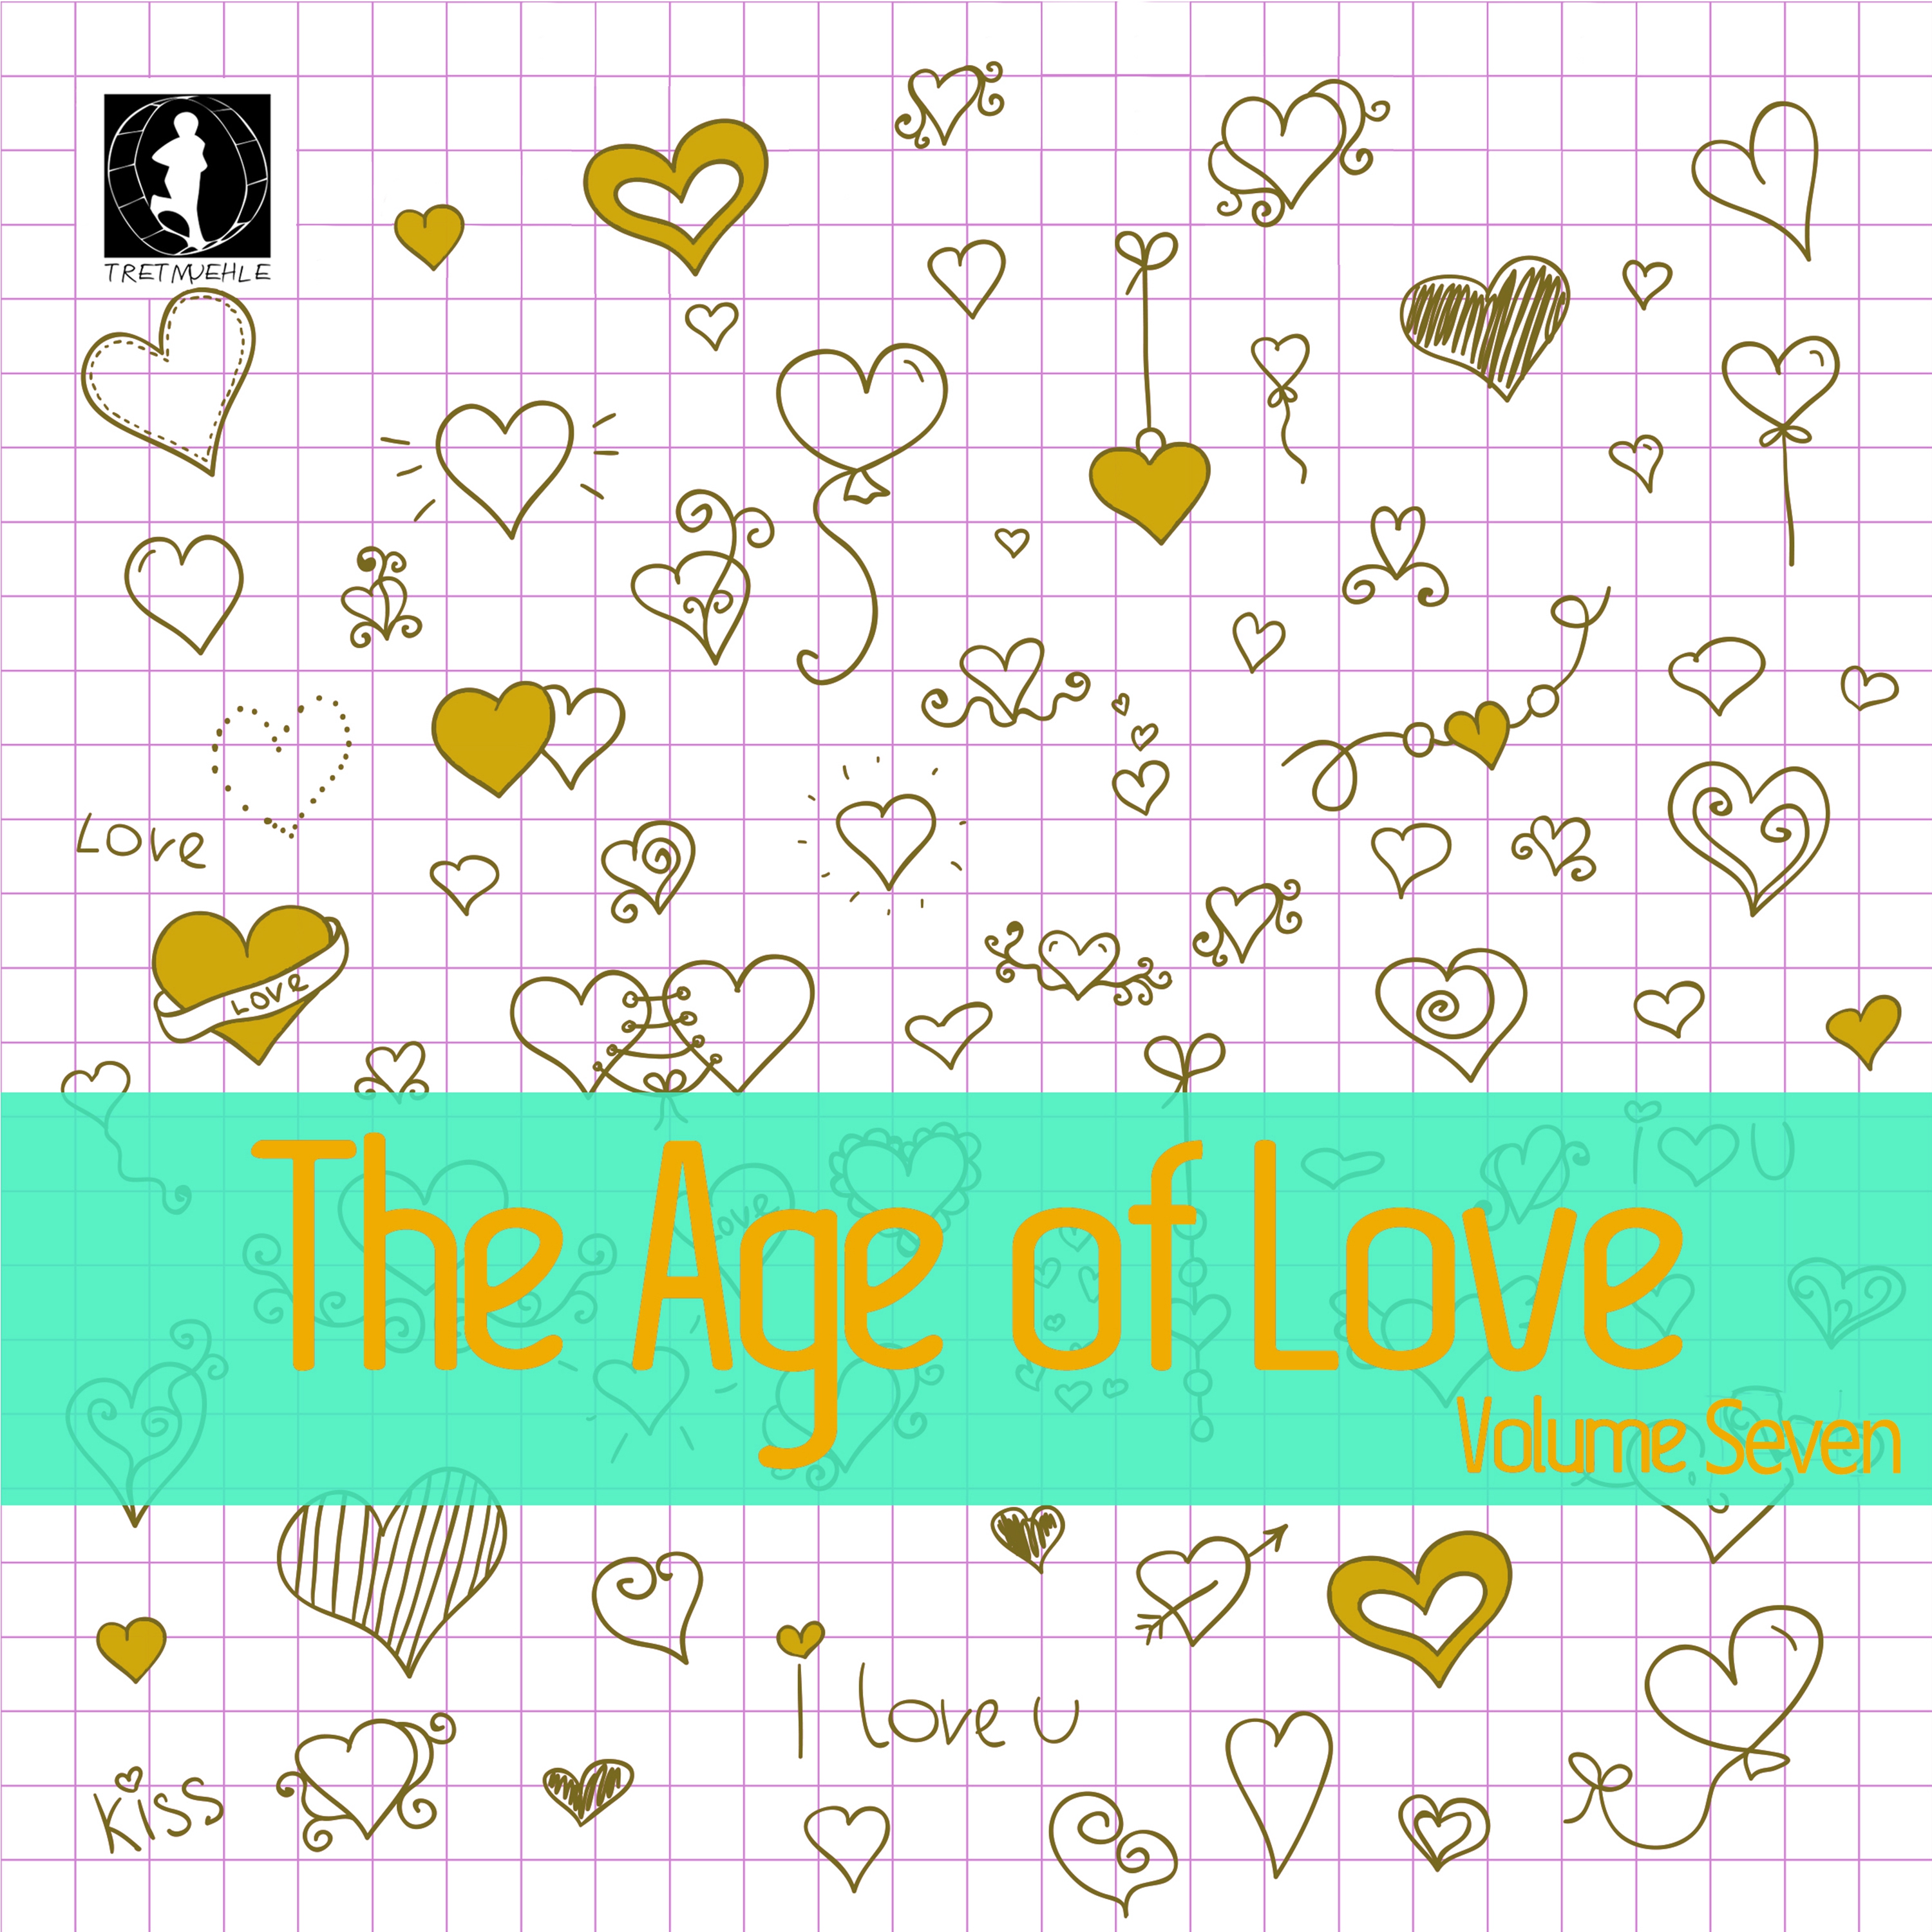 The Age of Love, Vol. 7